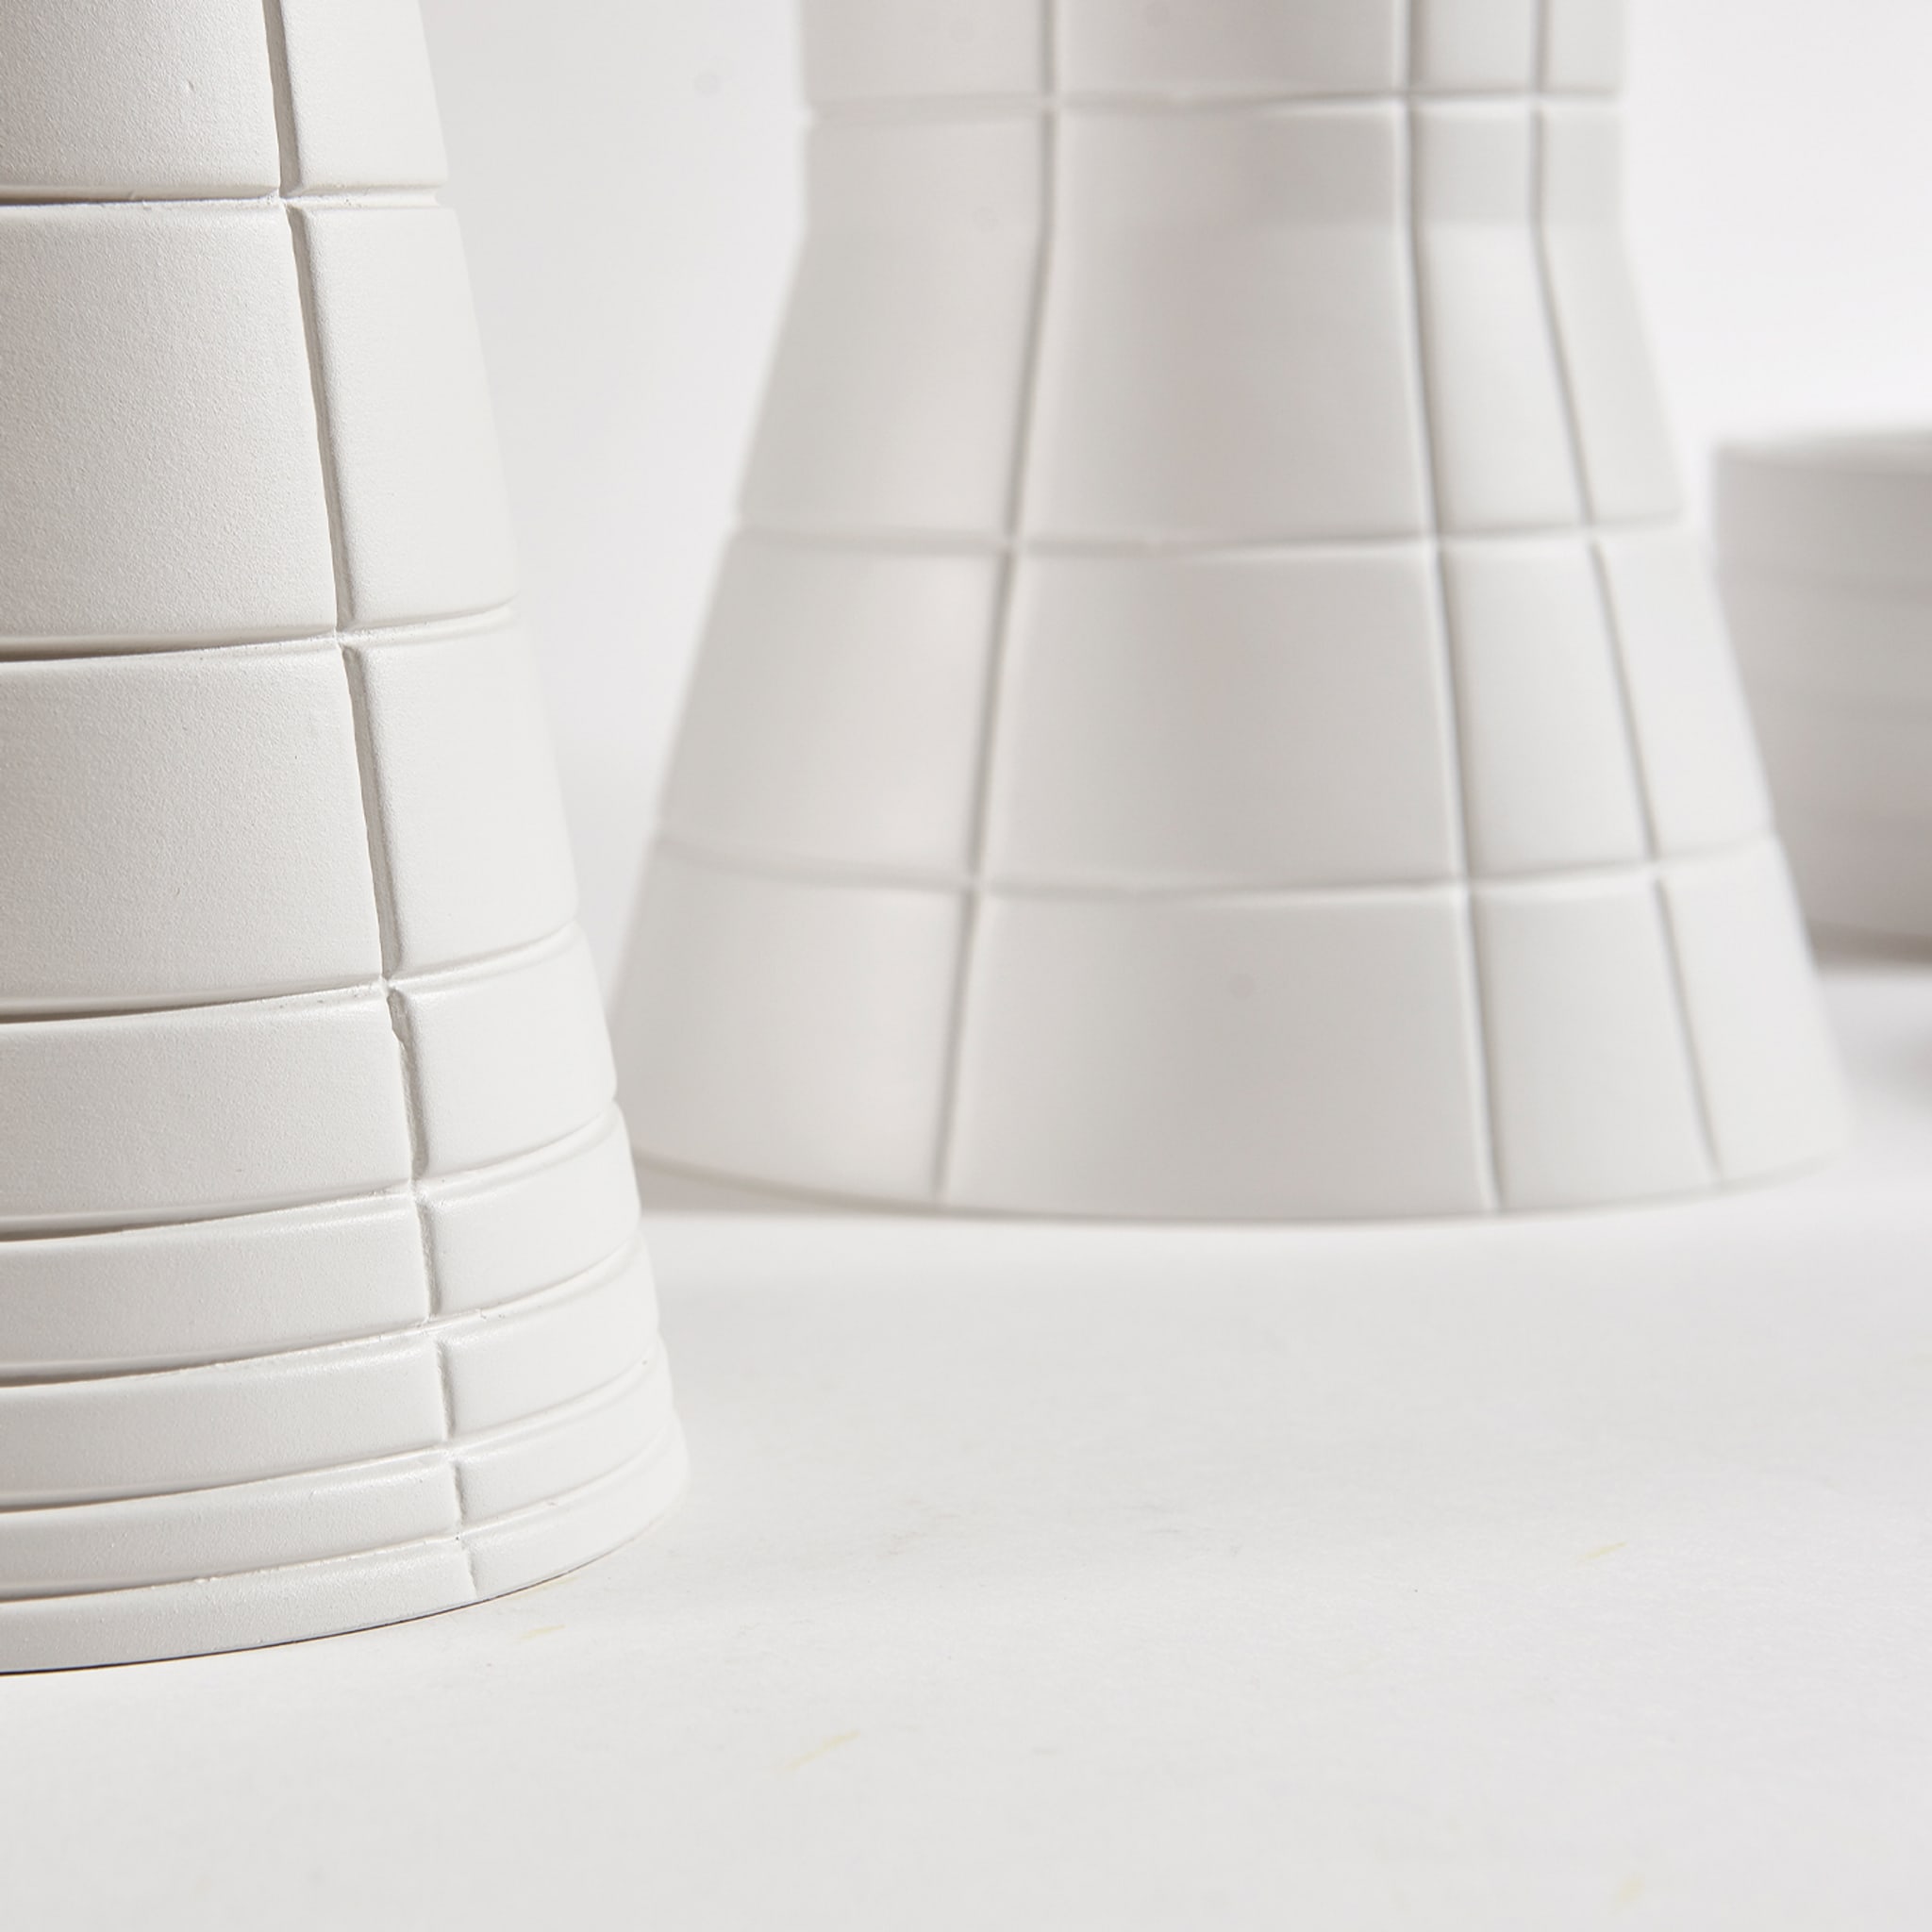 Rikuadra White Ceramic Vase #3 - Alternative view 2